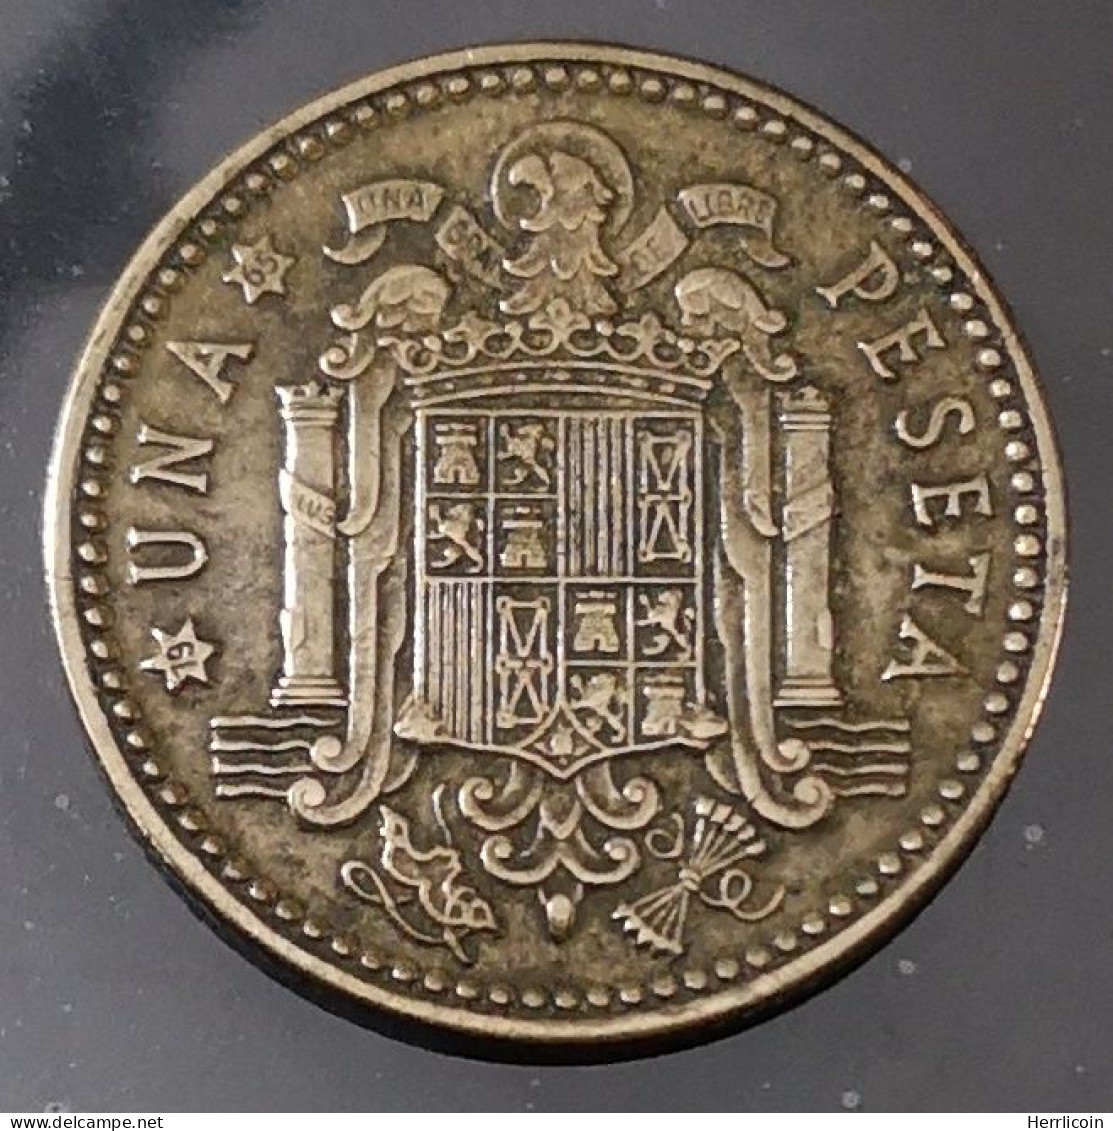 Monnaie Espagne - 1965 - 1 Peseta Franco 1re Effigie - 1 Peseta